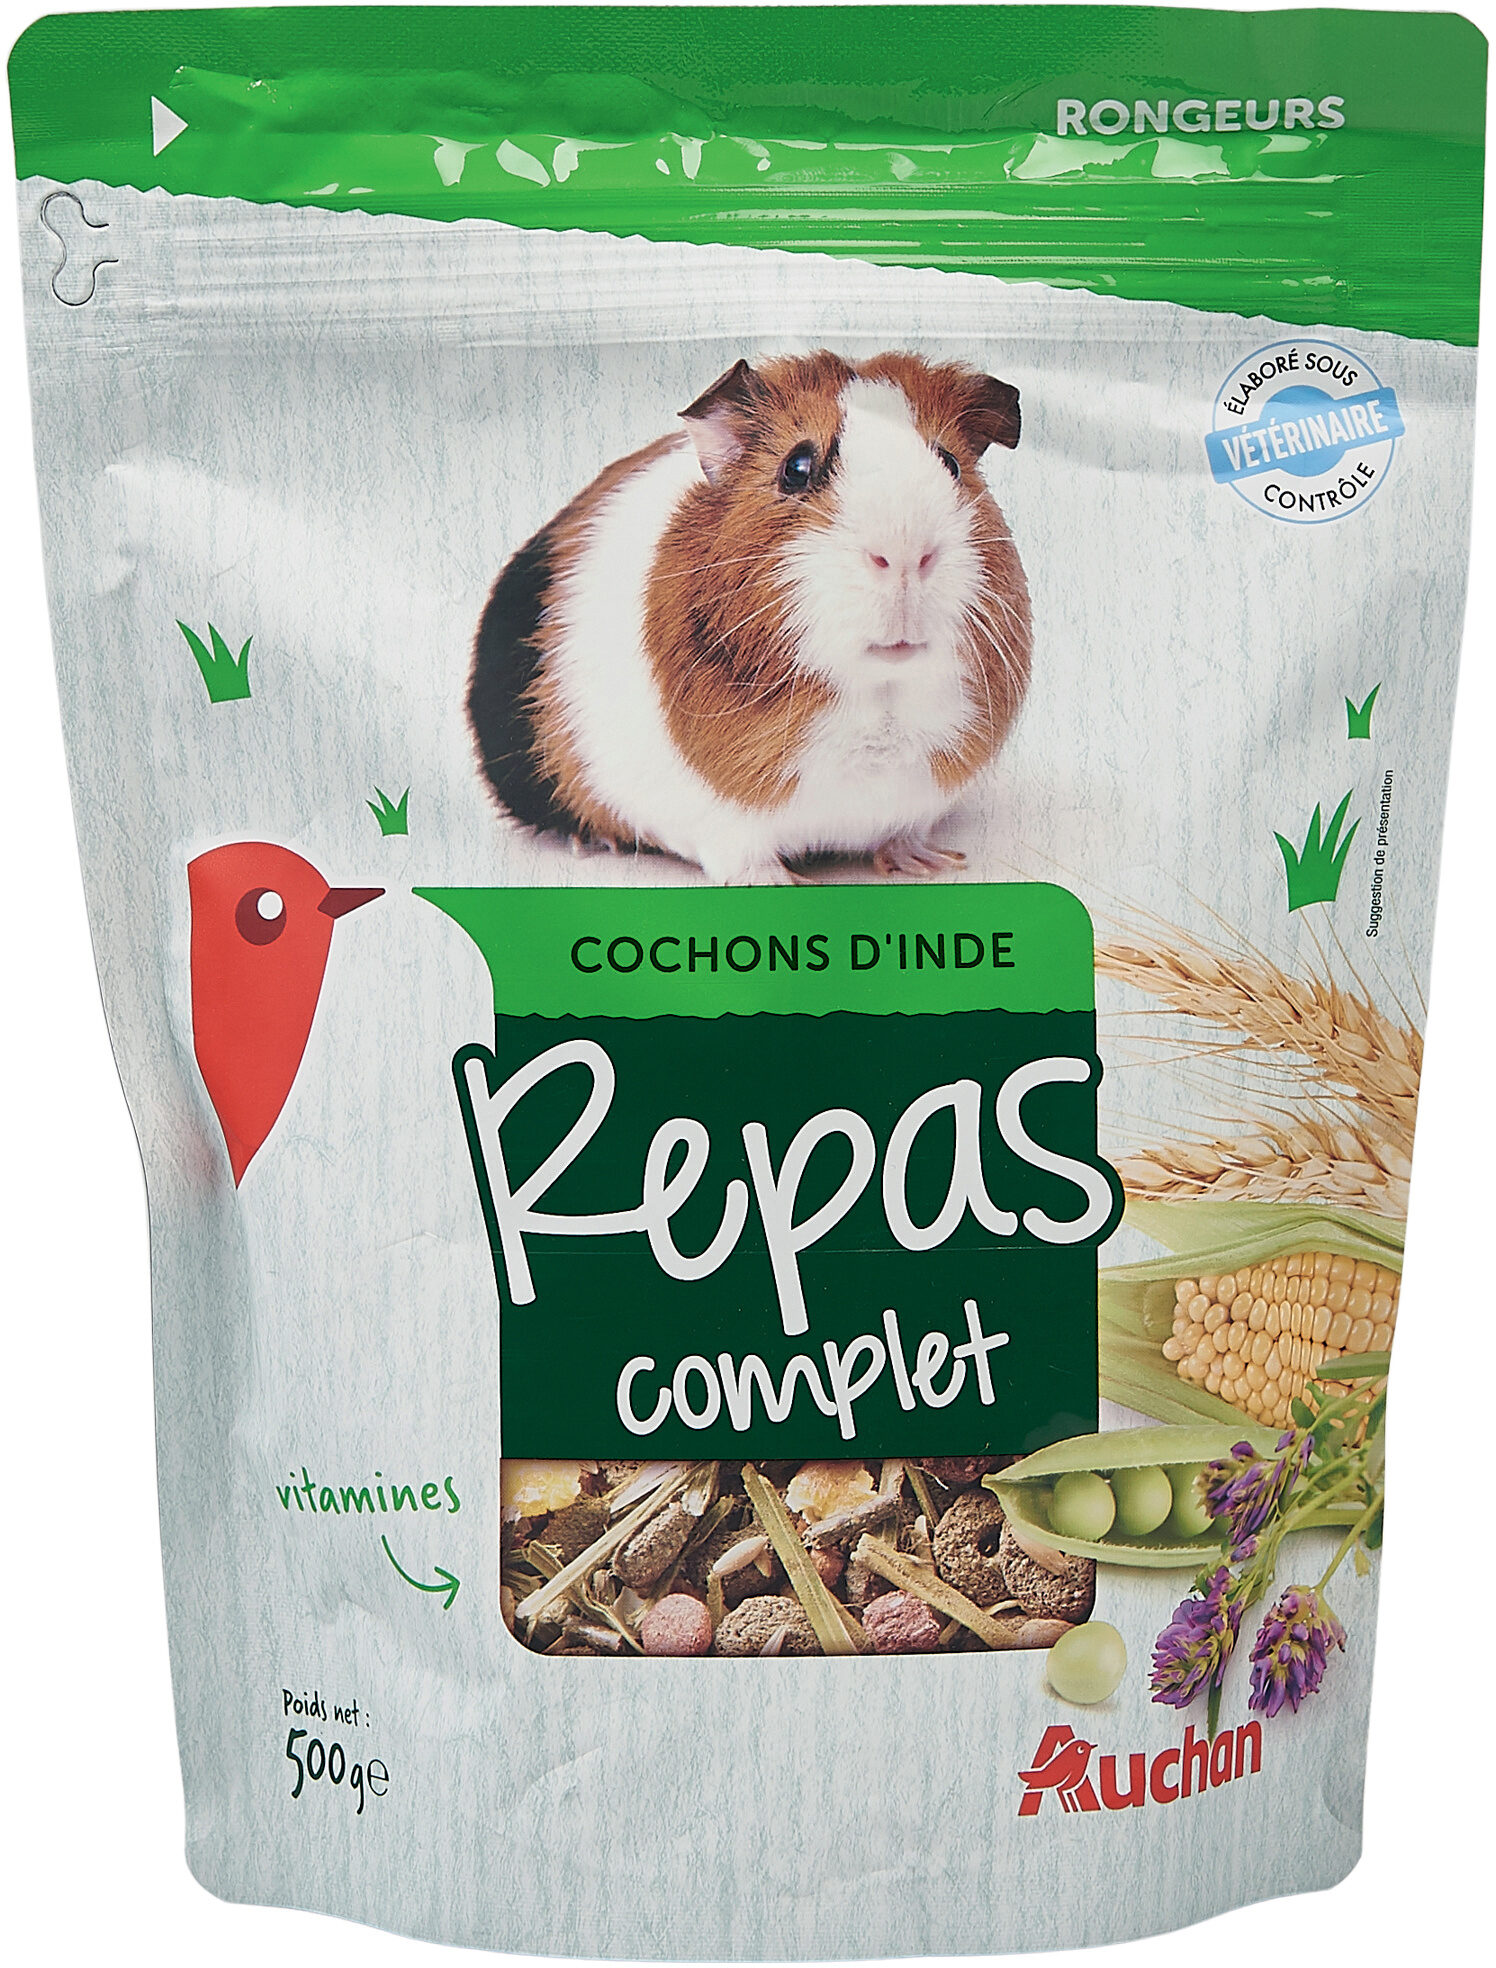 Cochons d'Inde REPAS COMPLET - Product - fr